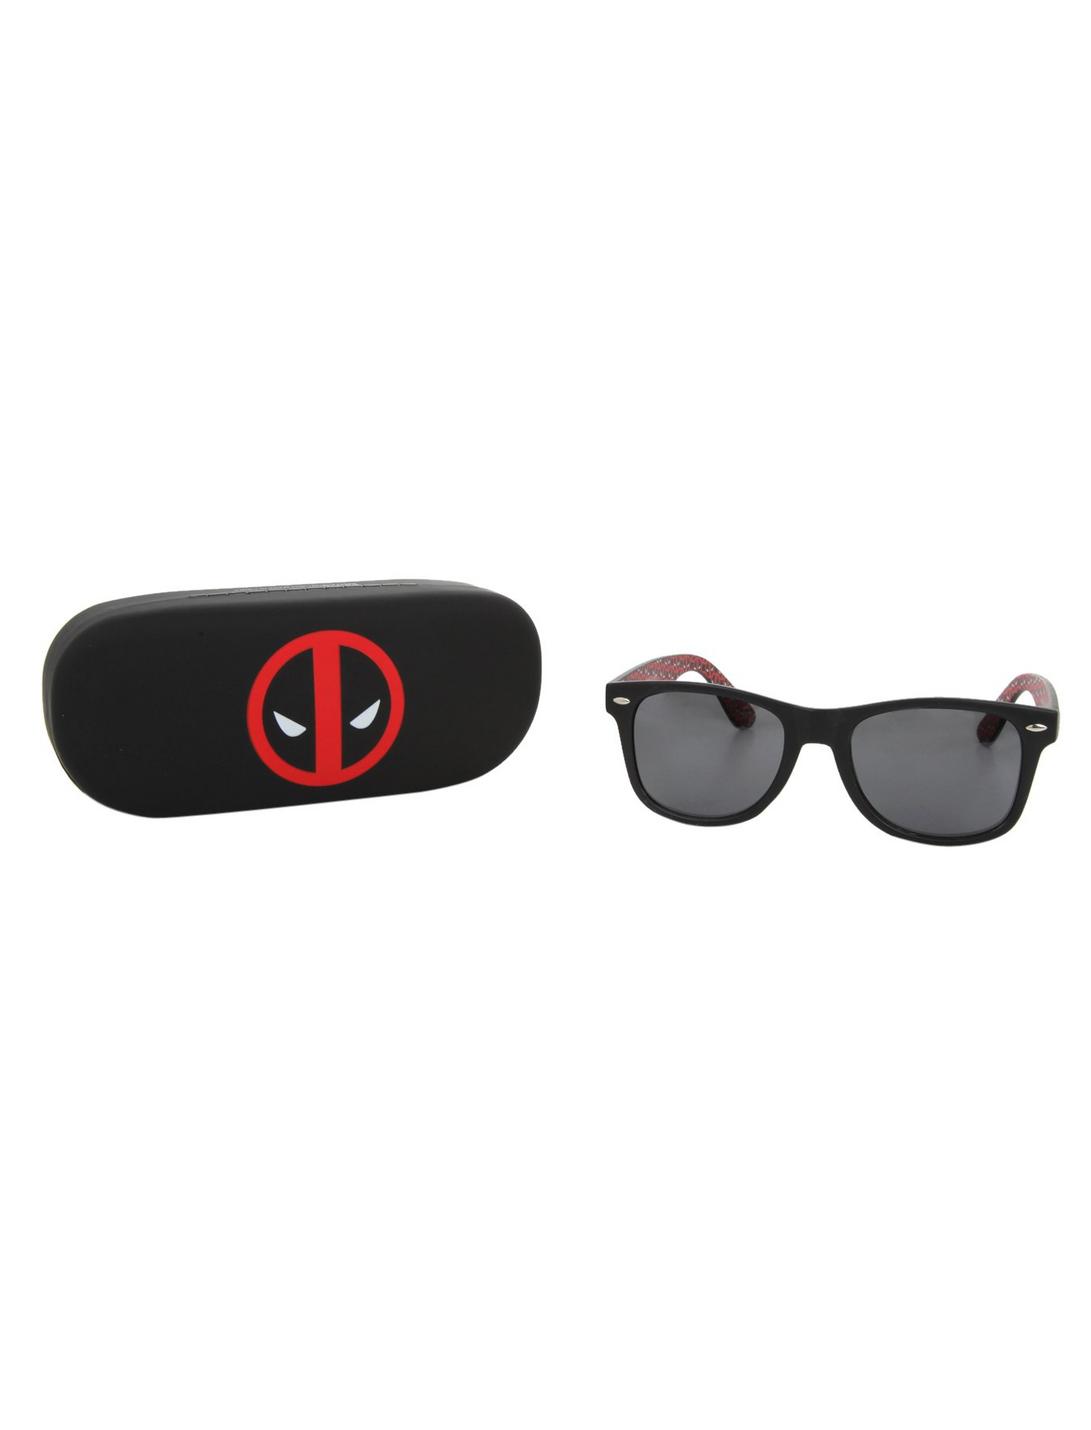 Marvel Deadpool Sunglasses & Case Gift Set, , hi-res